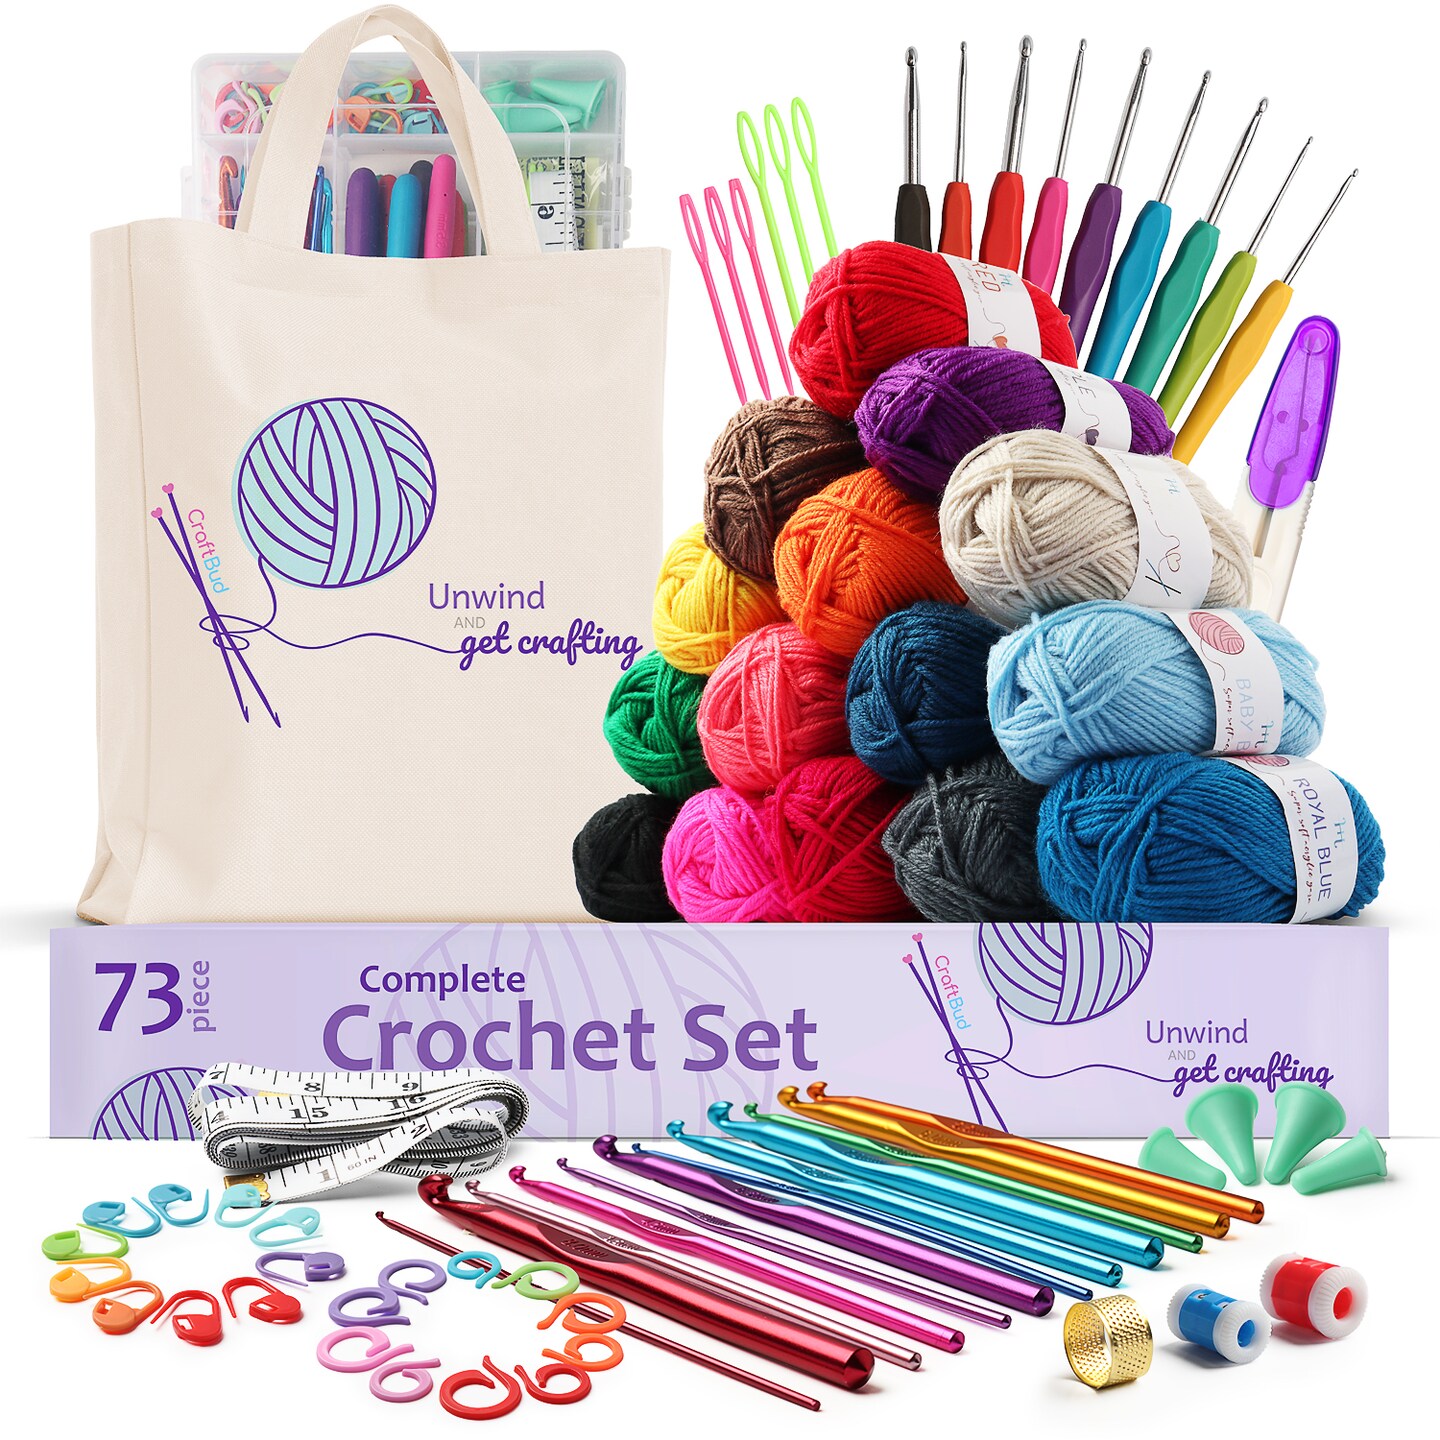 Knitting Crochet Markers with Plastic Box 20 Pcs Small + 20 Pcs